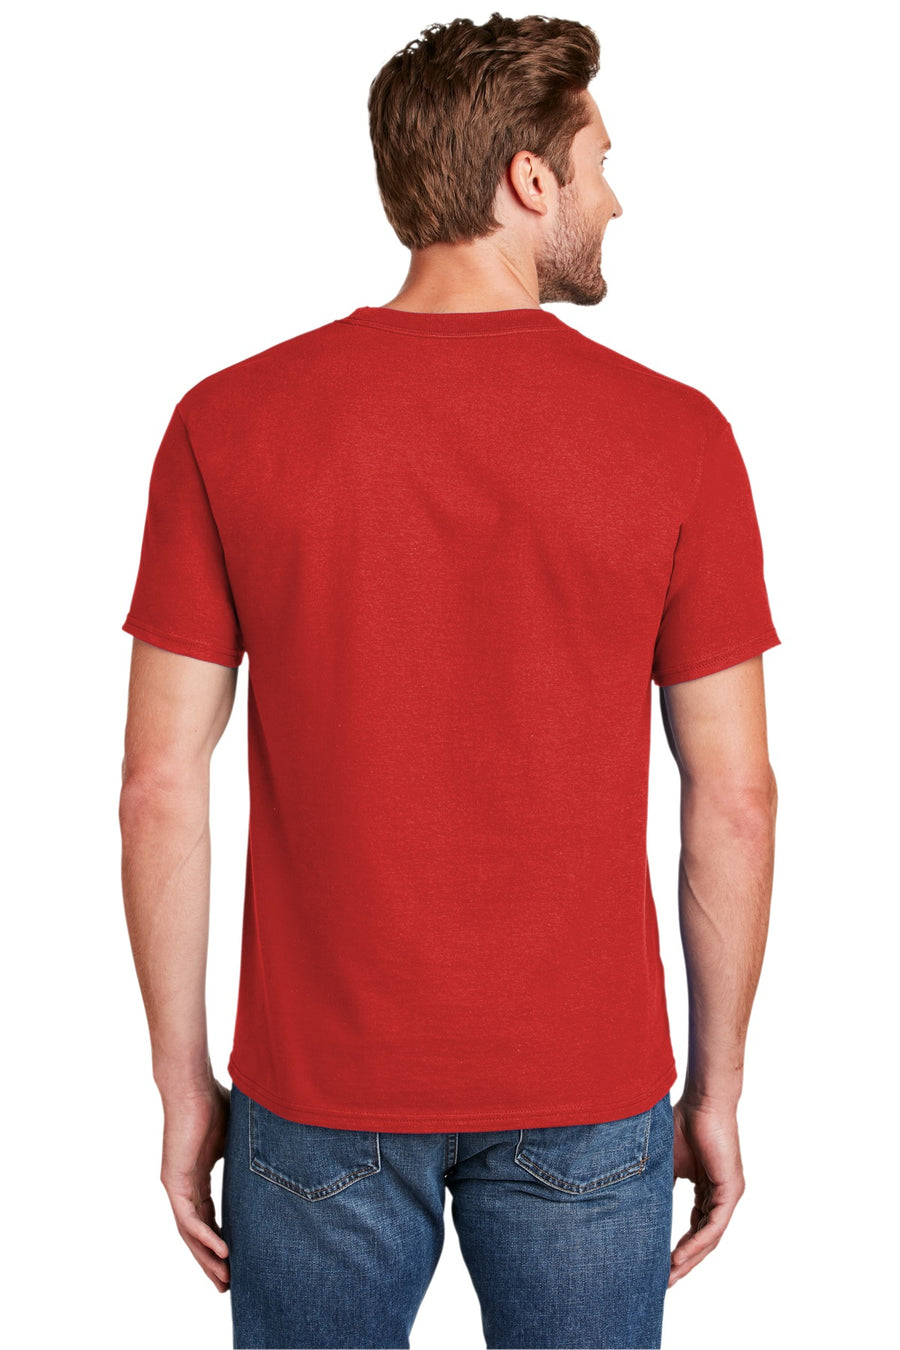 5180-Athletic Red-back_model